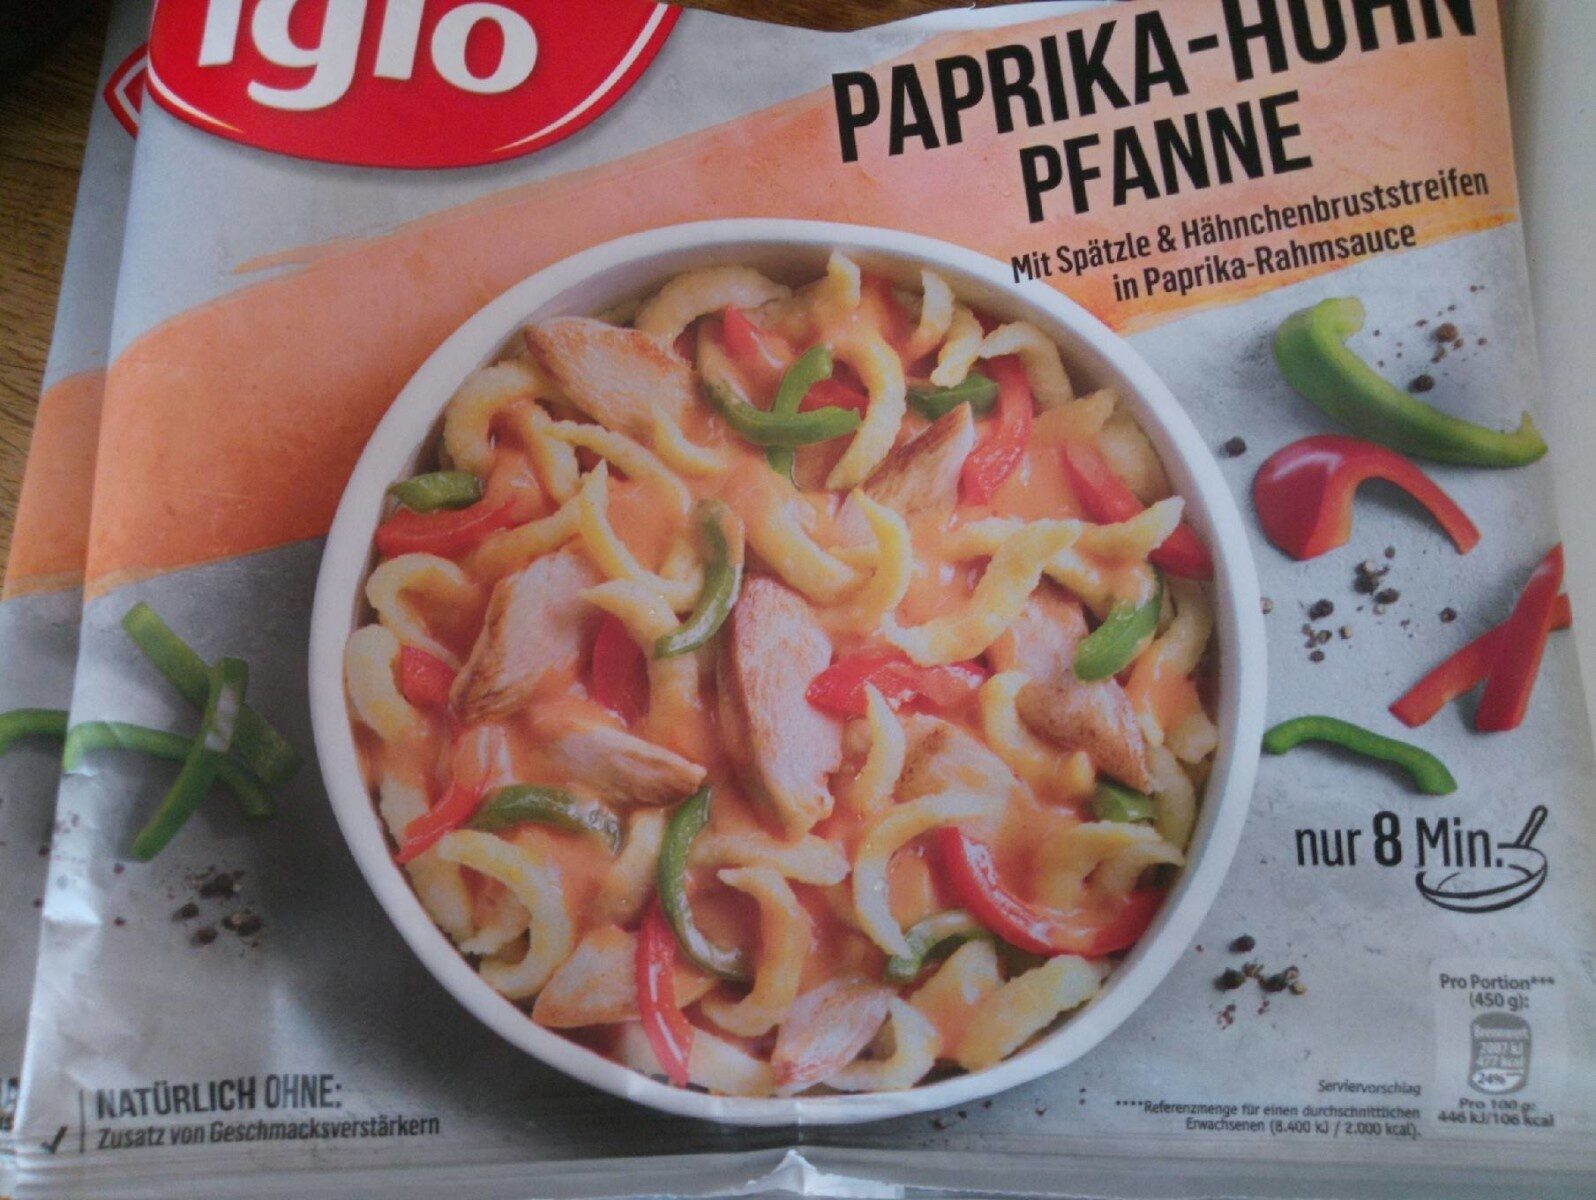 Paprika-Huhn Pfanne - Product - de